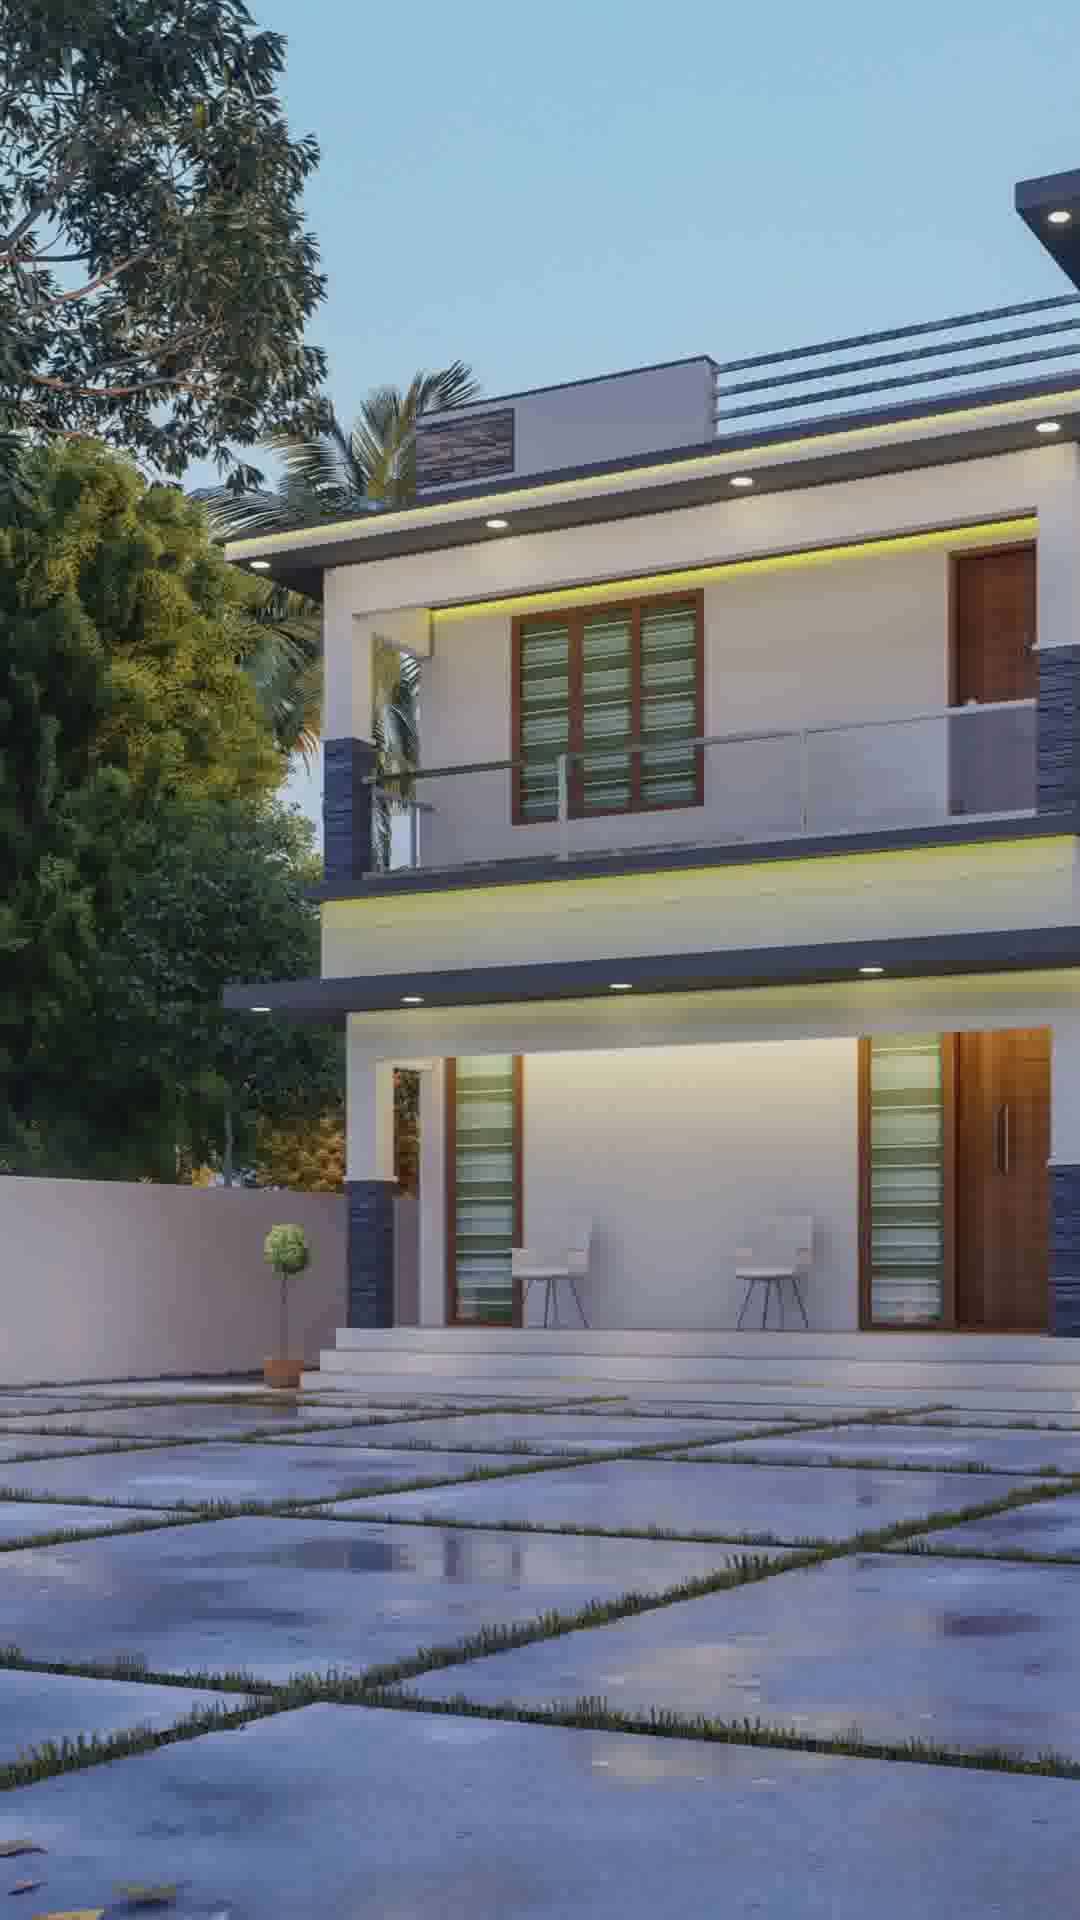 rate the design
#jcaddsolution #jcadd #exteriors #3drenders #exteriordesigns #KeralaStyleHouse #keralatraditionalmural #keralaarchitectures #lumionrendering